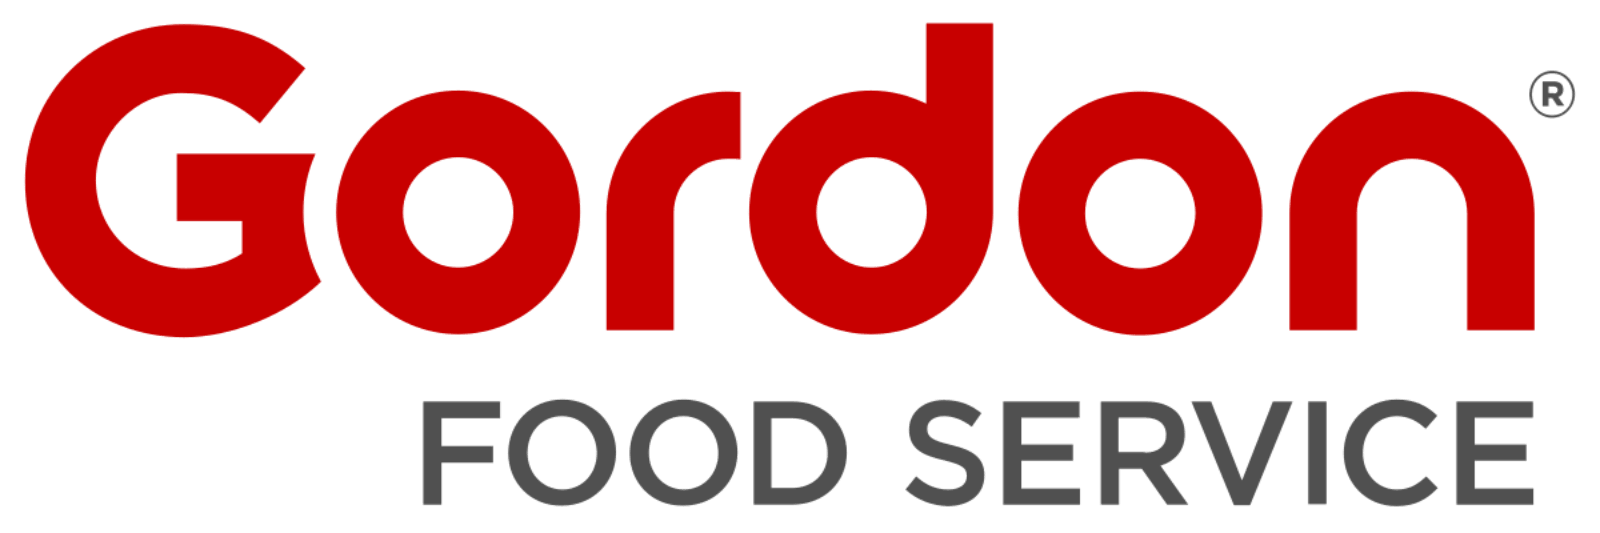 gordon food service